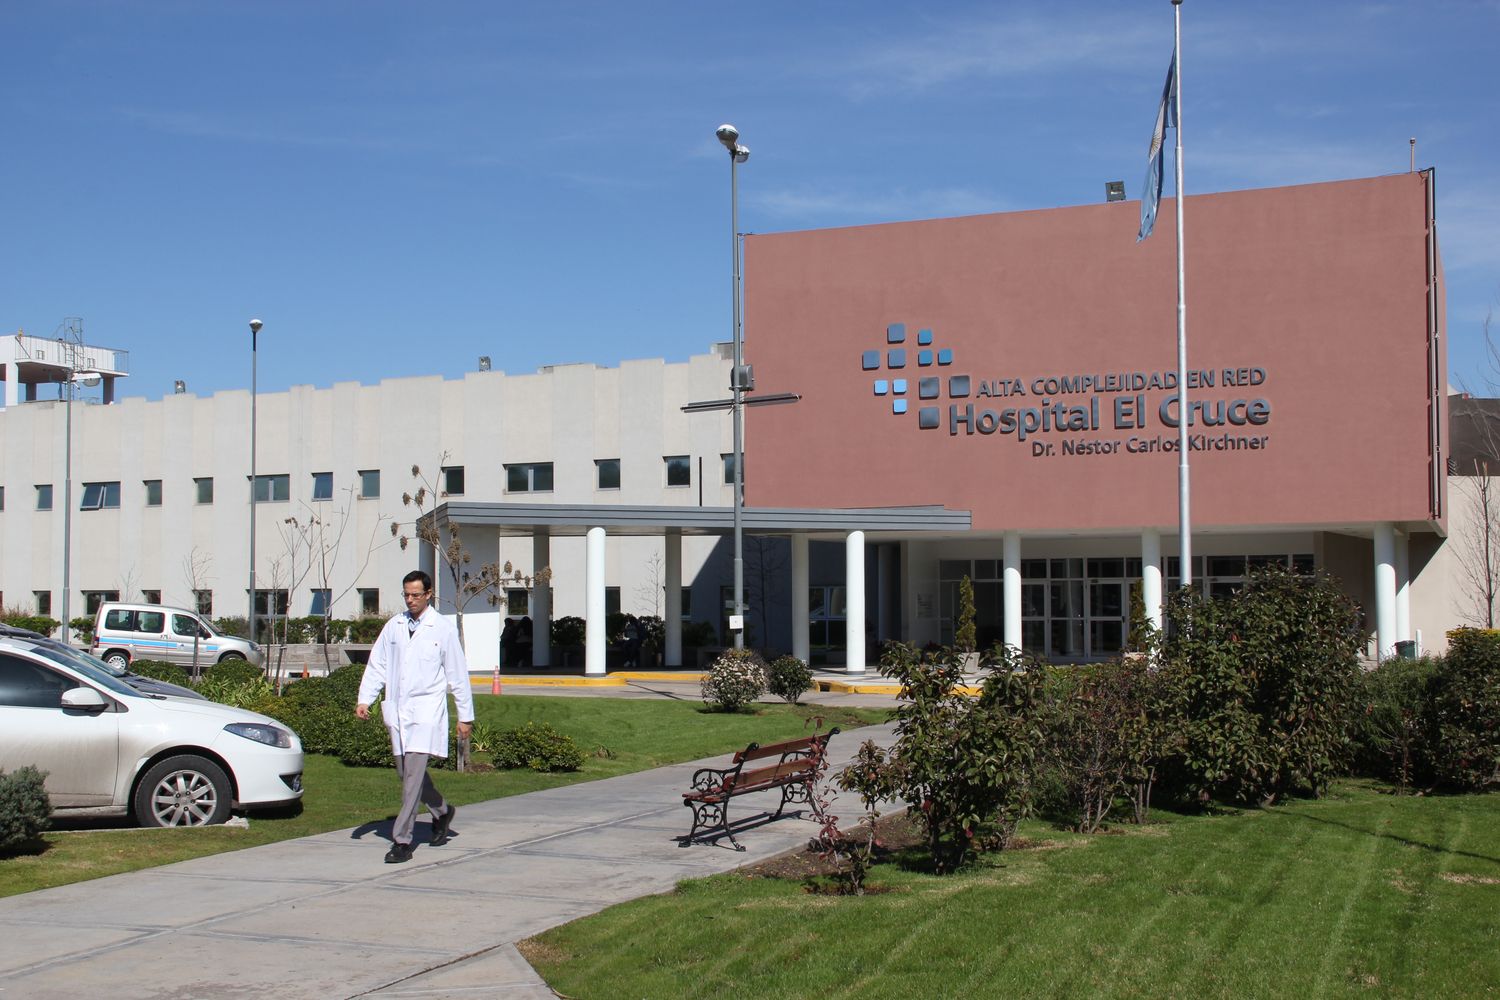 El hospital "El Cruce", entre los mejores de América Latina